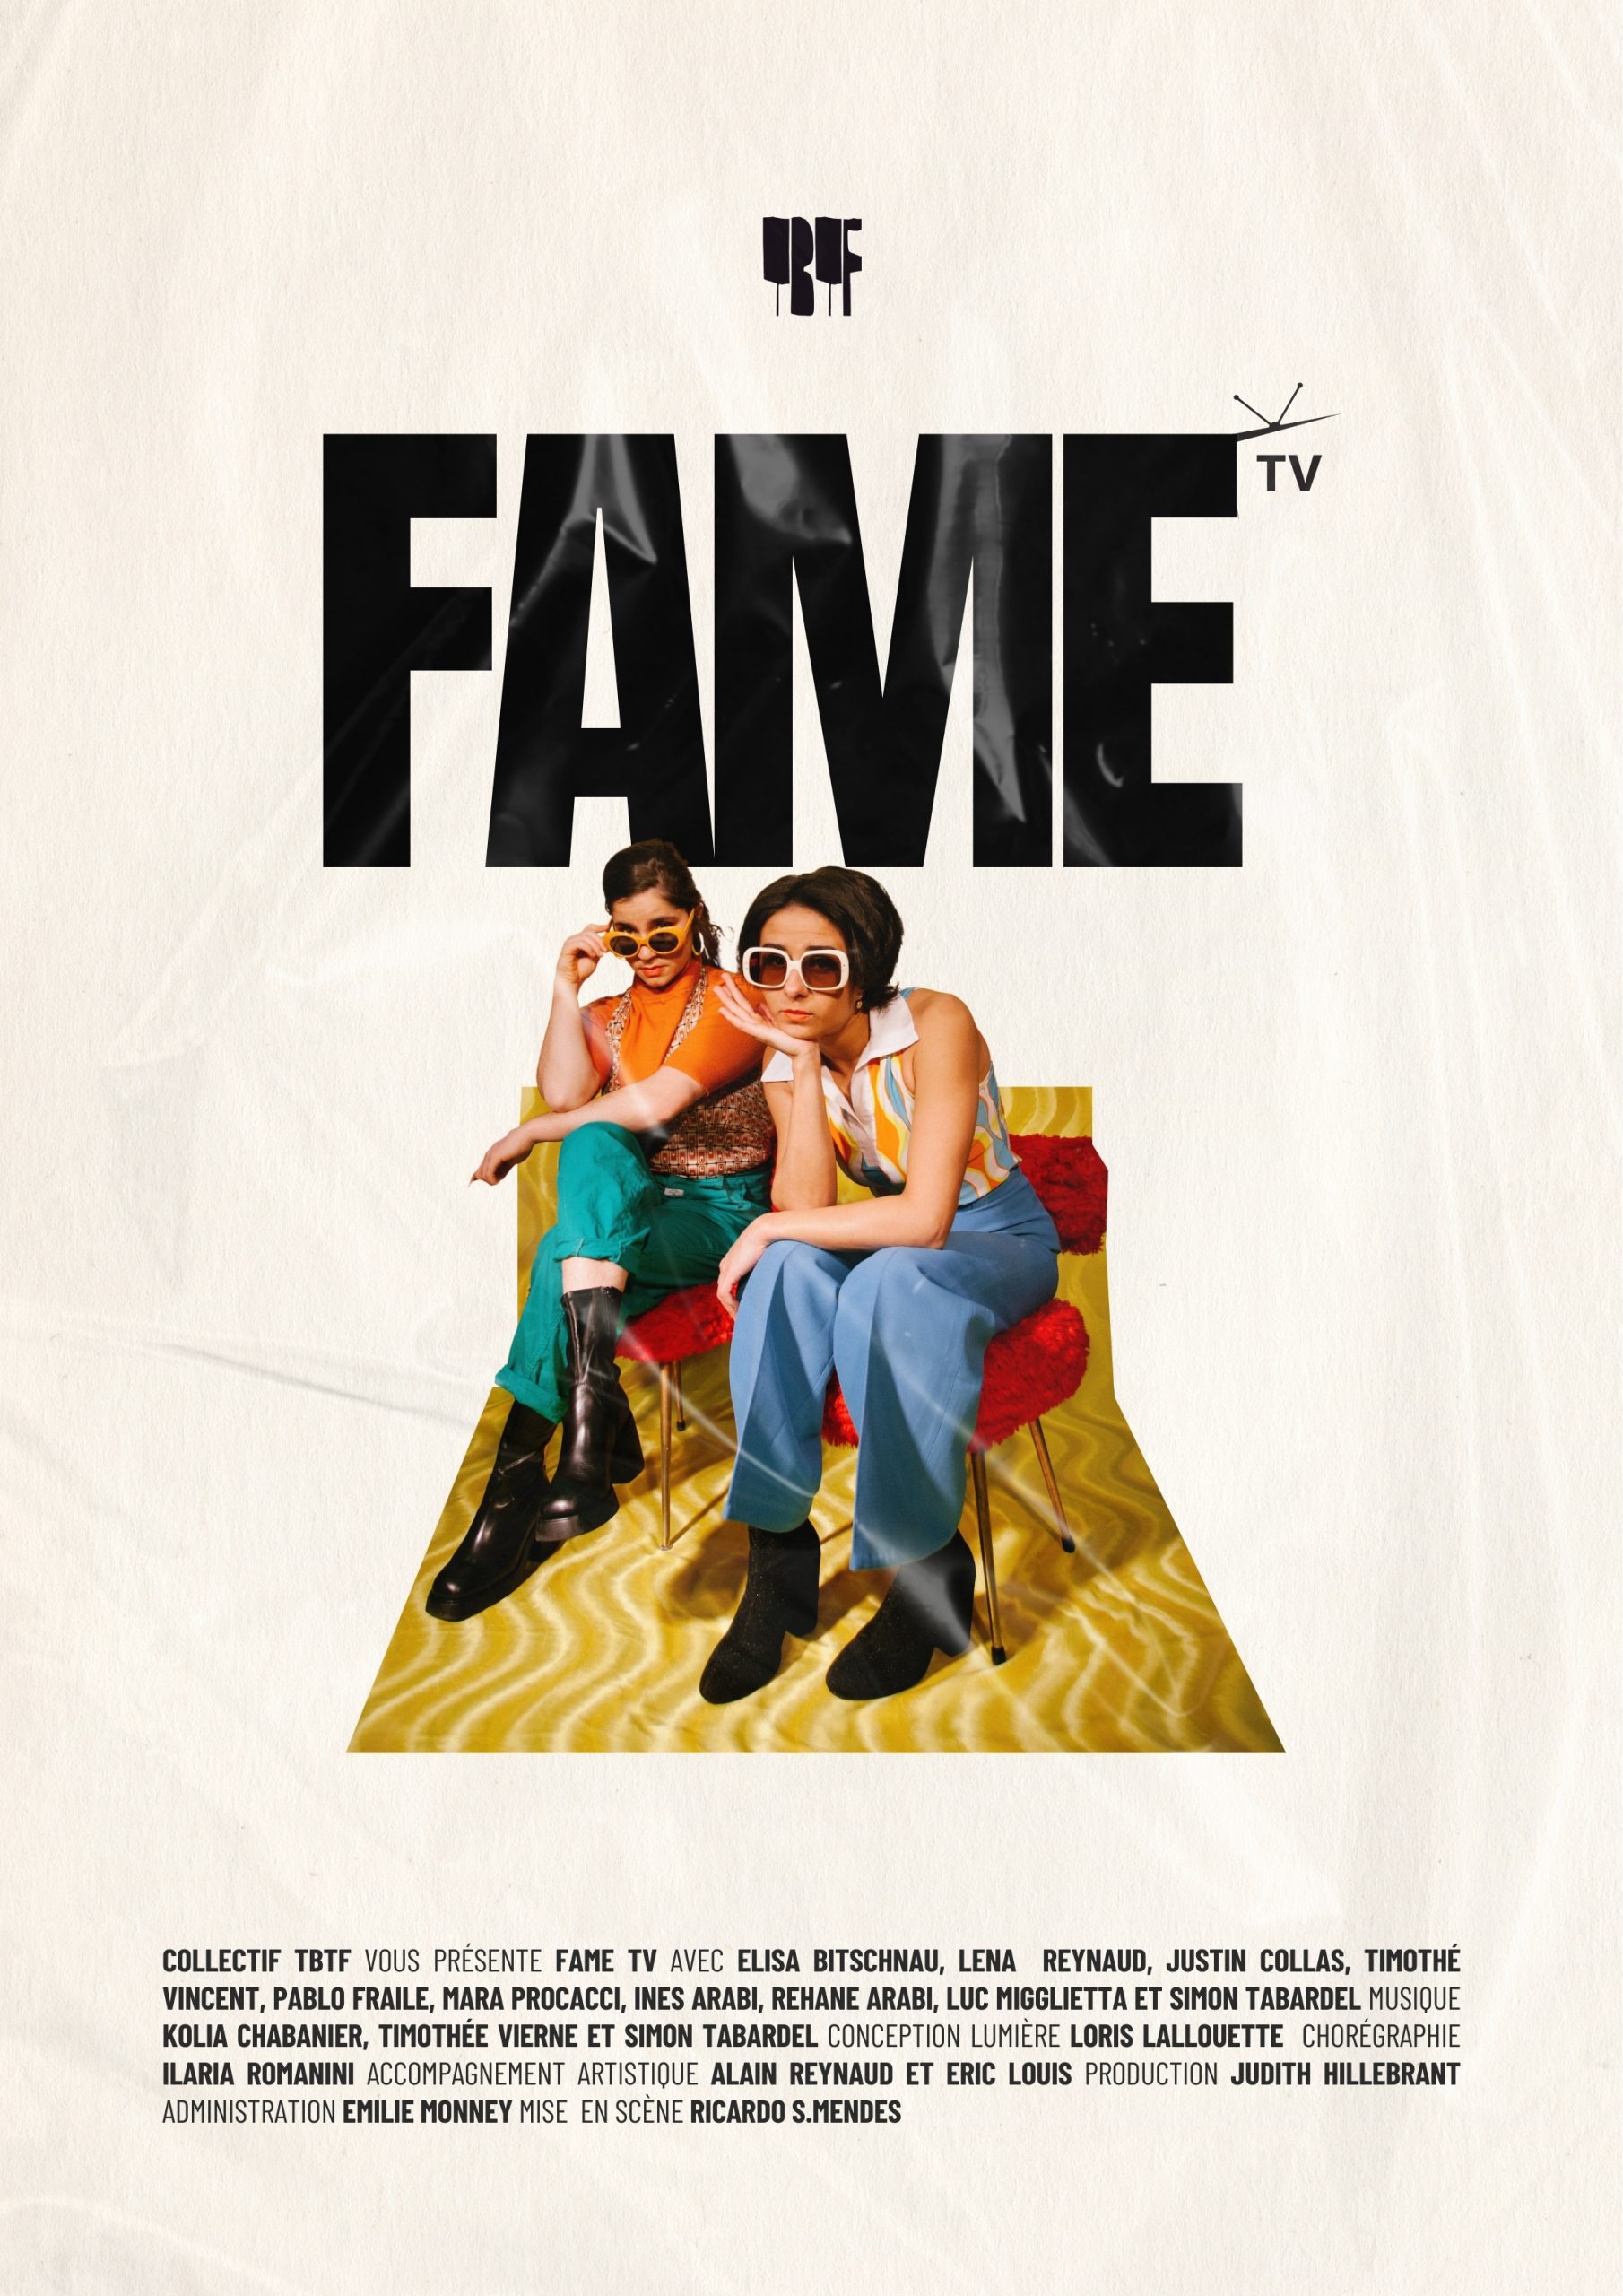 Collectif TBTF – Fame TV